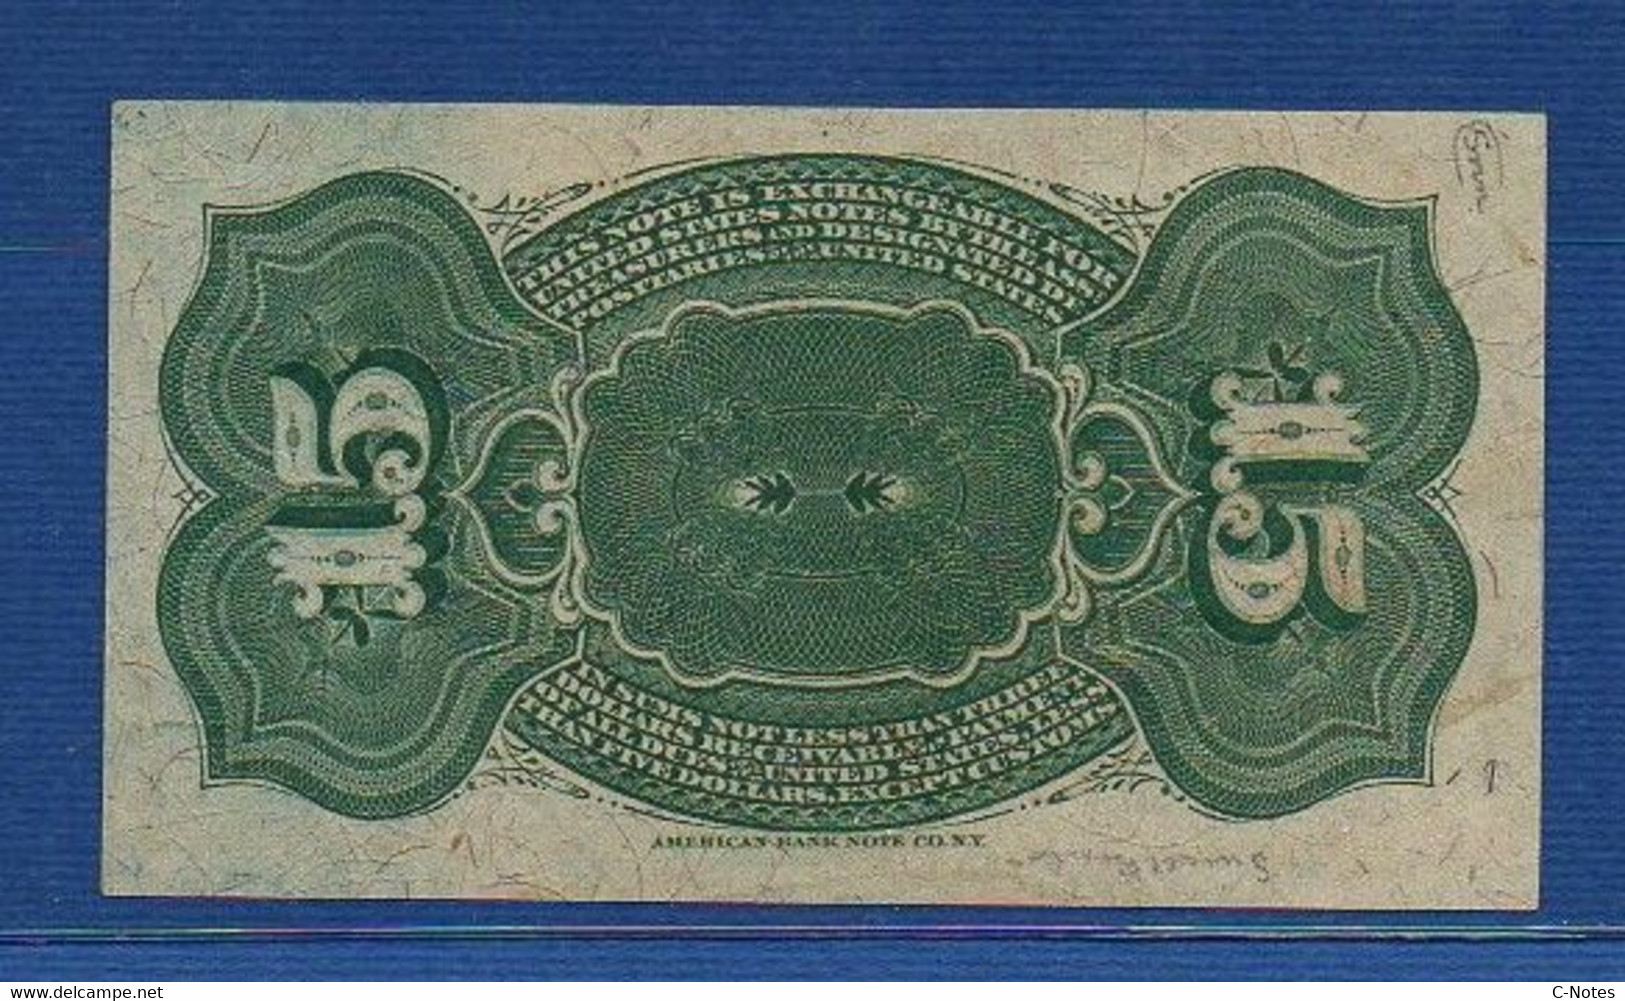 UNITED STATES OF AMERICA - P.116 – 15 Cents 1863 AUNC, No Serial Number - 1863 : 4° Edizione